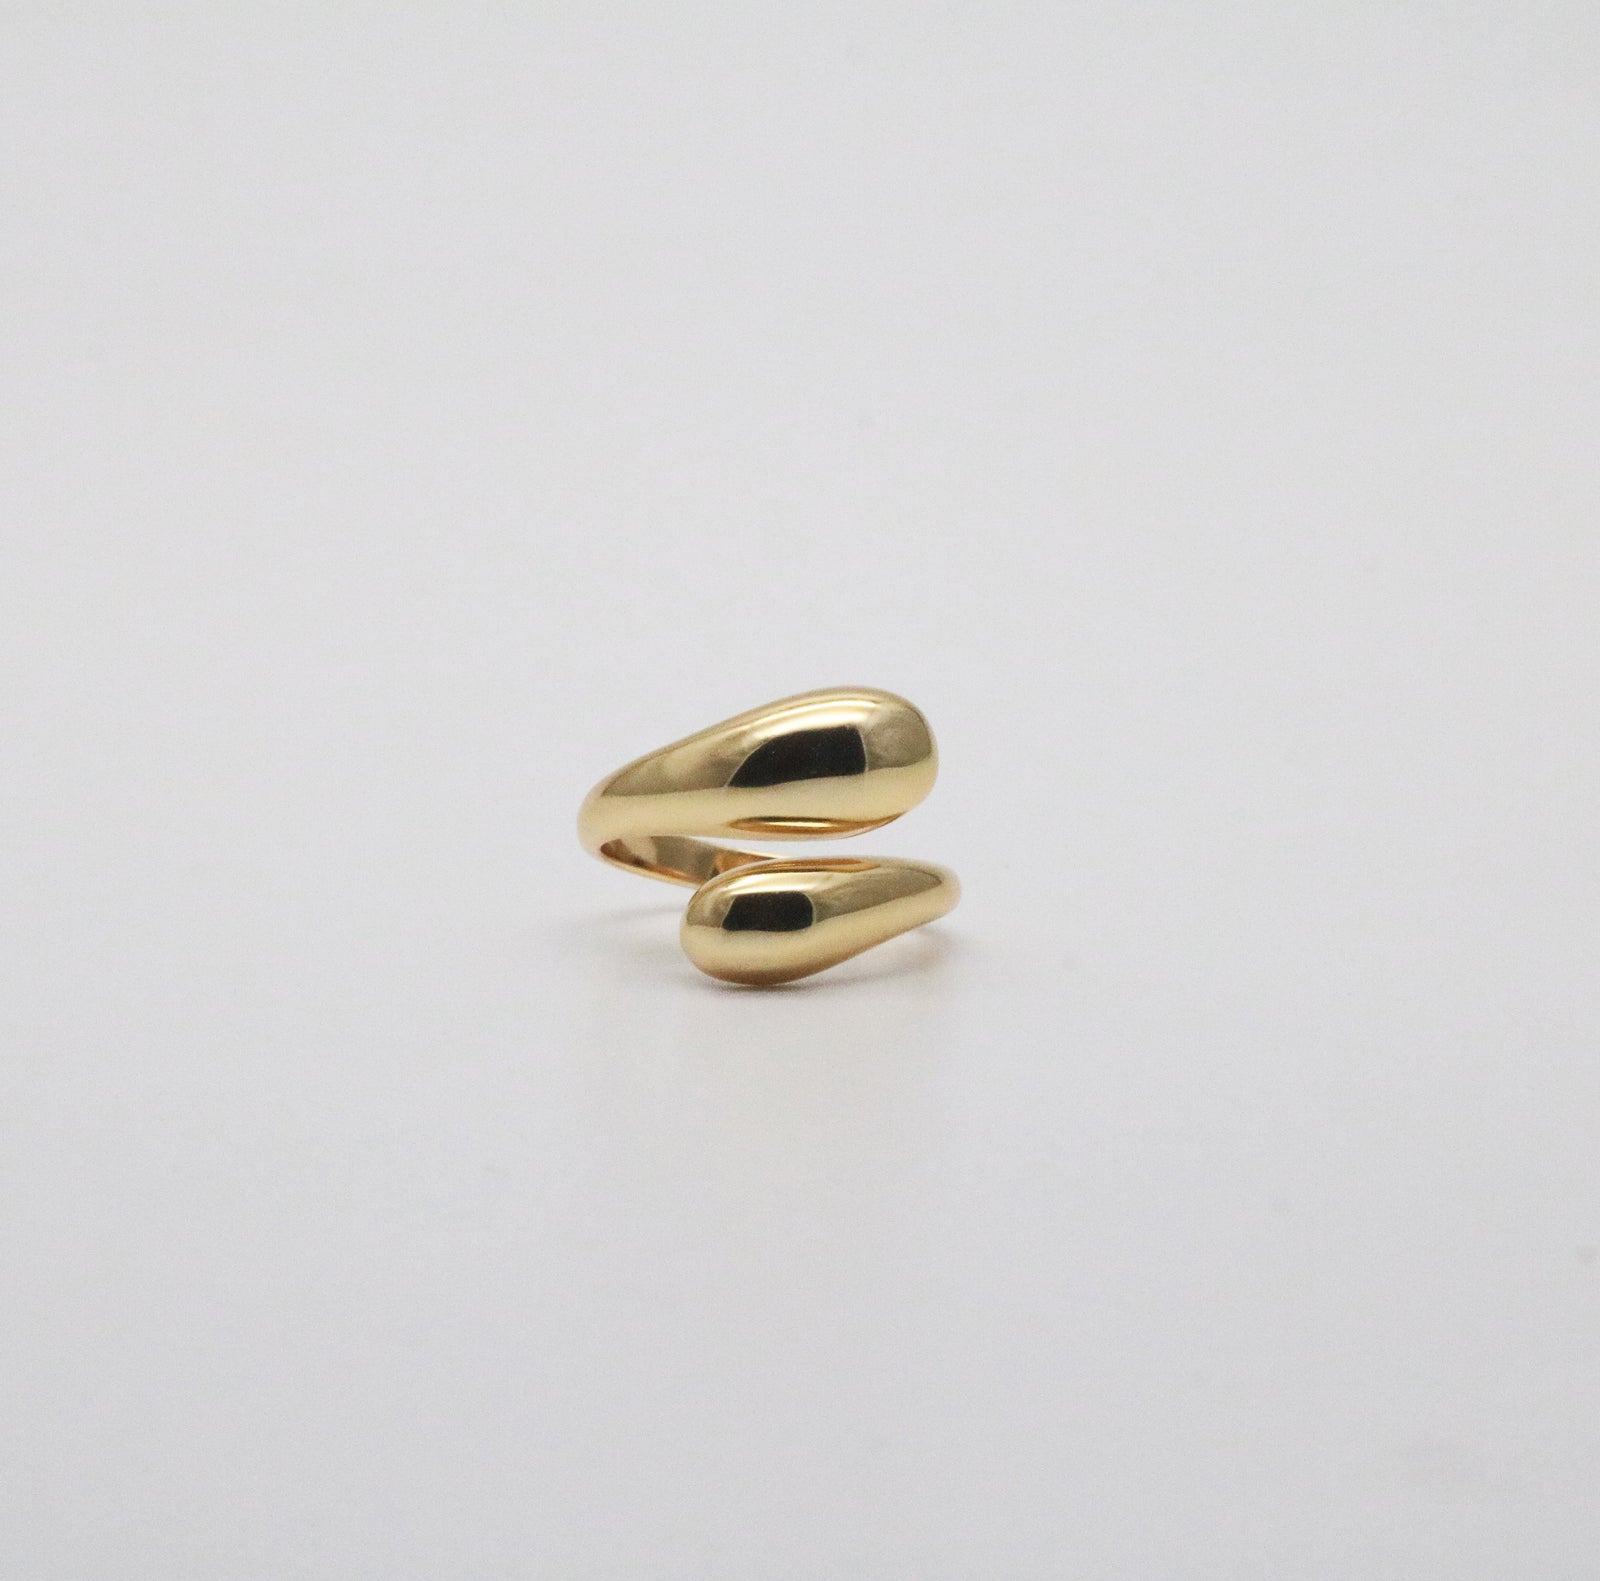 Meideya Jewelry - The Maggie ring in 18k gold vermeil